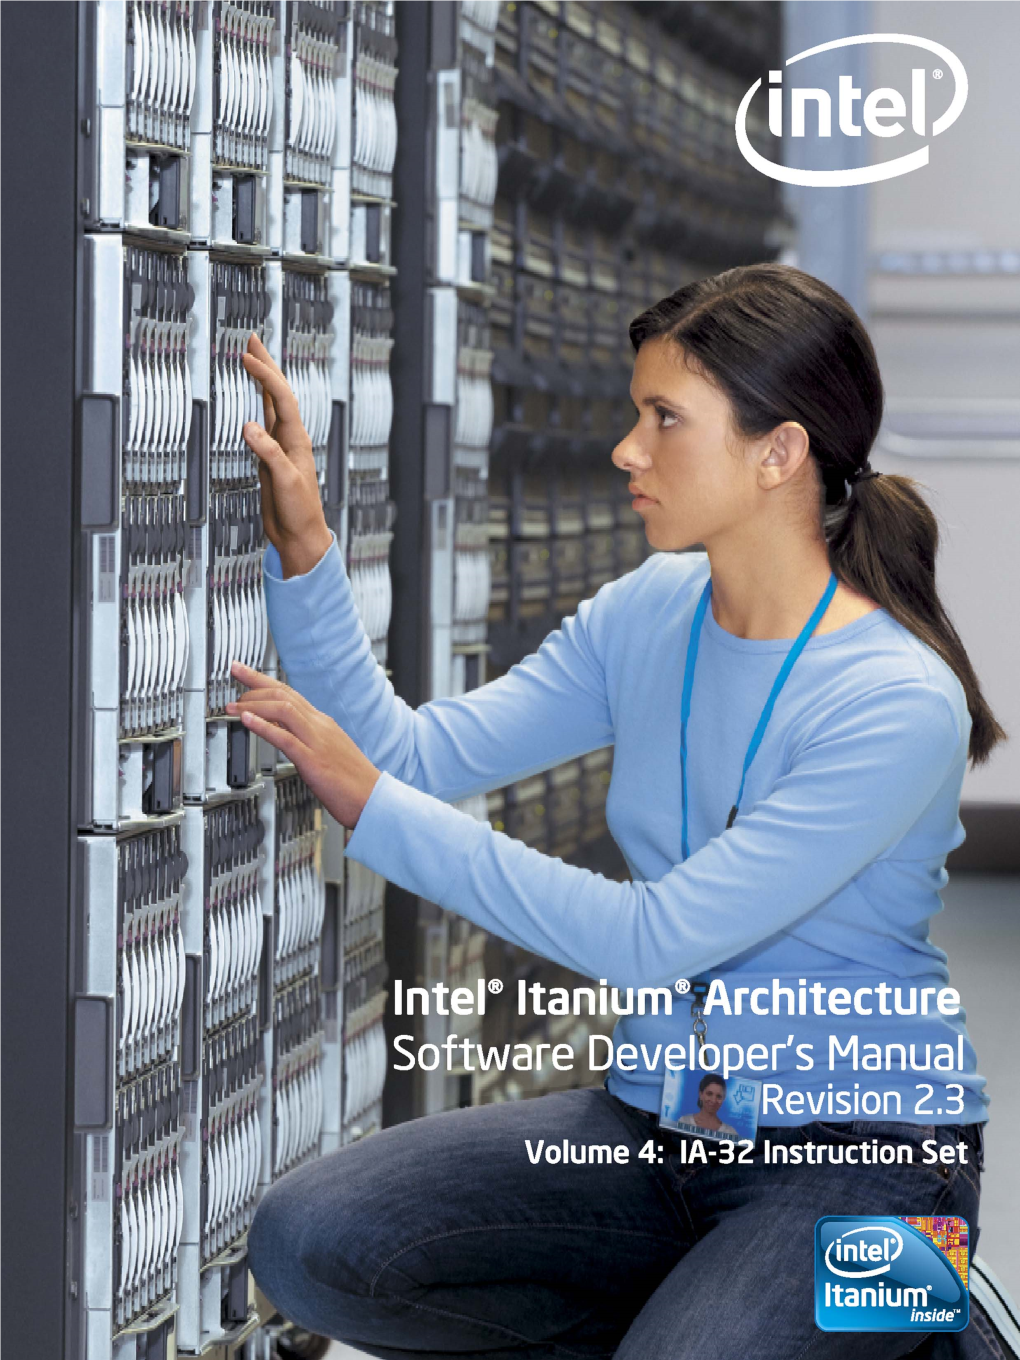 Intel® Itanium® Architecture Software Developer's Manual, Volume 4